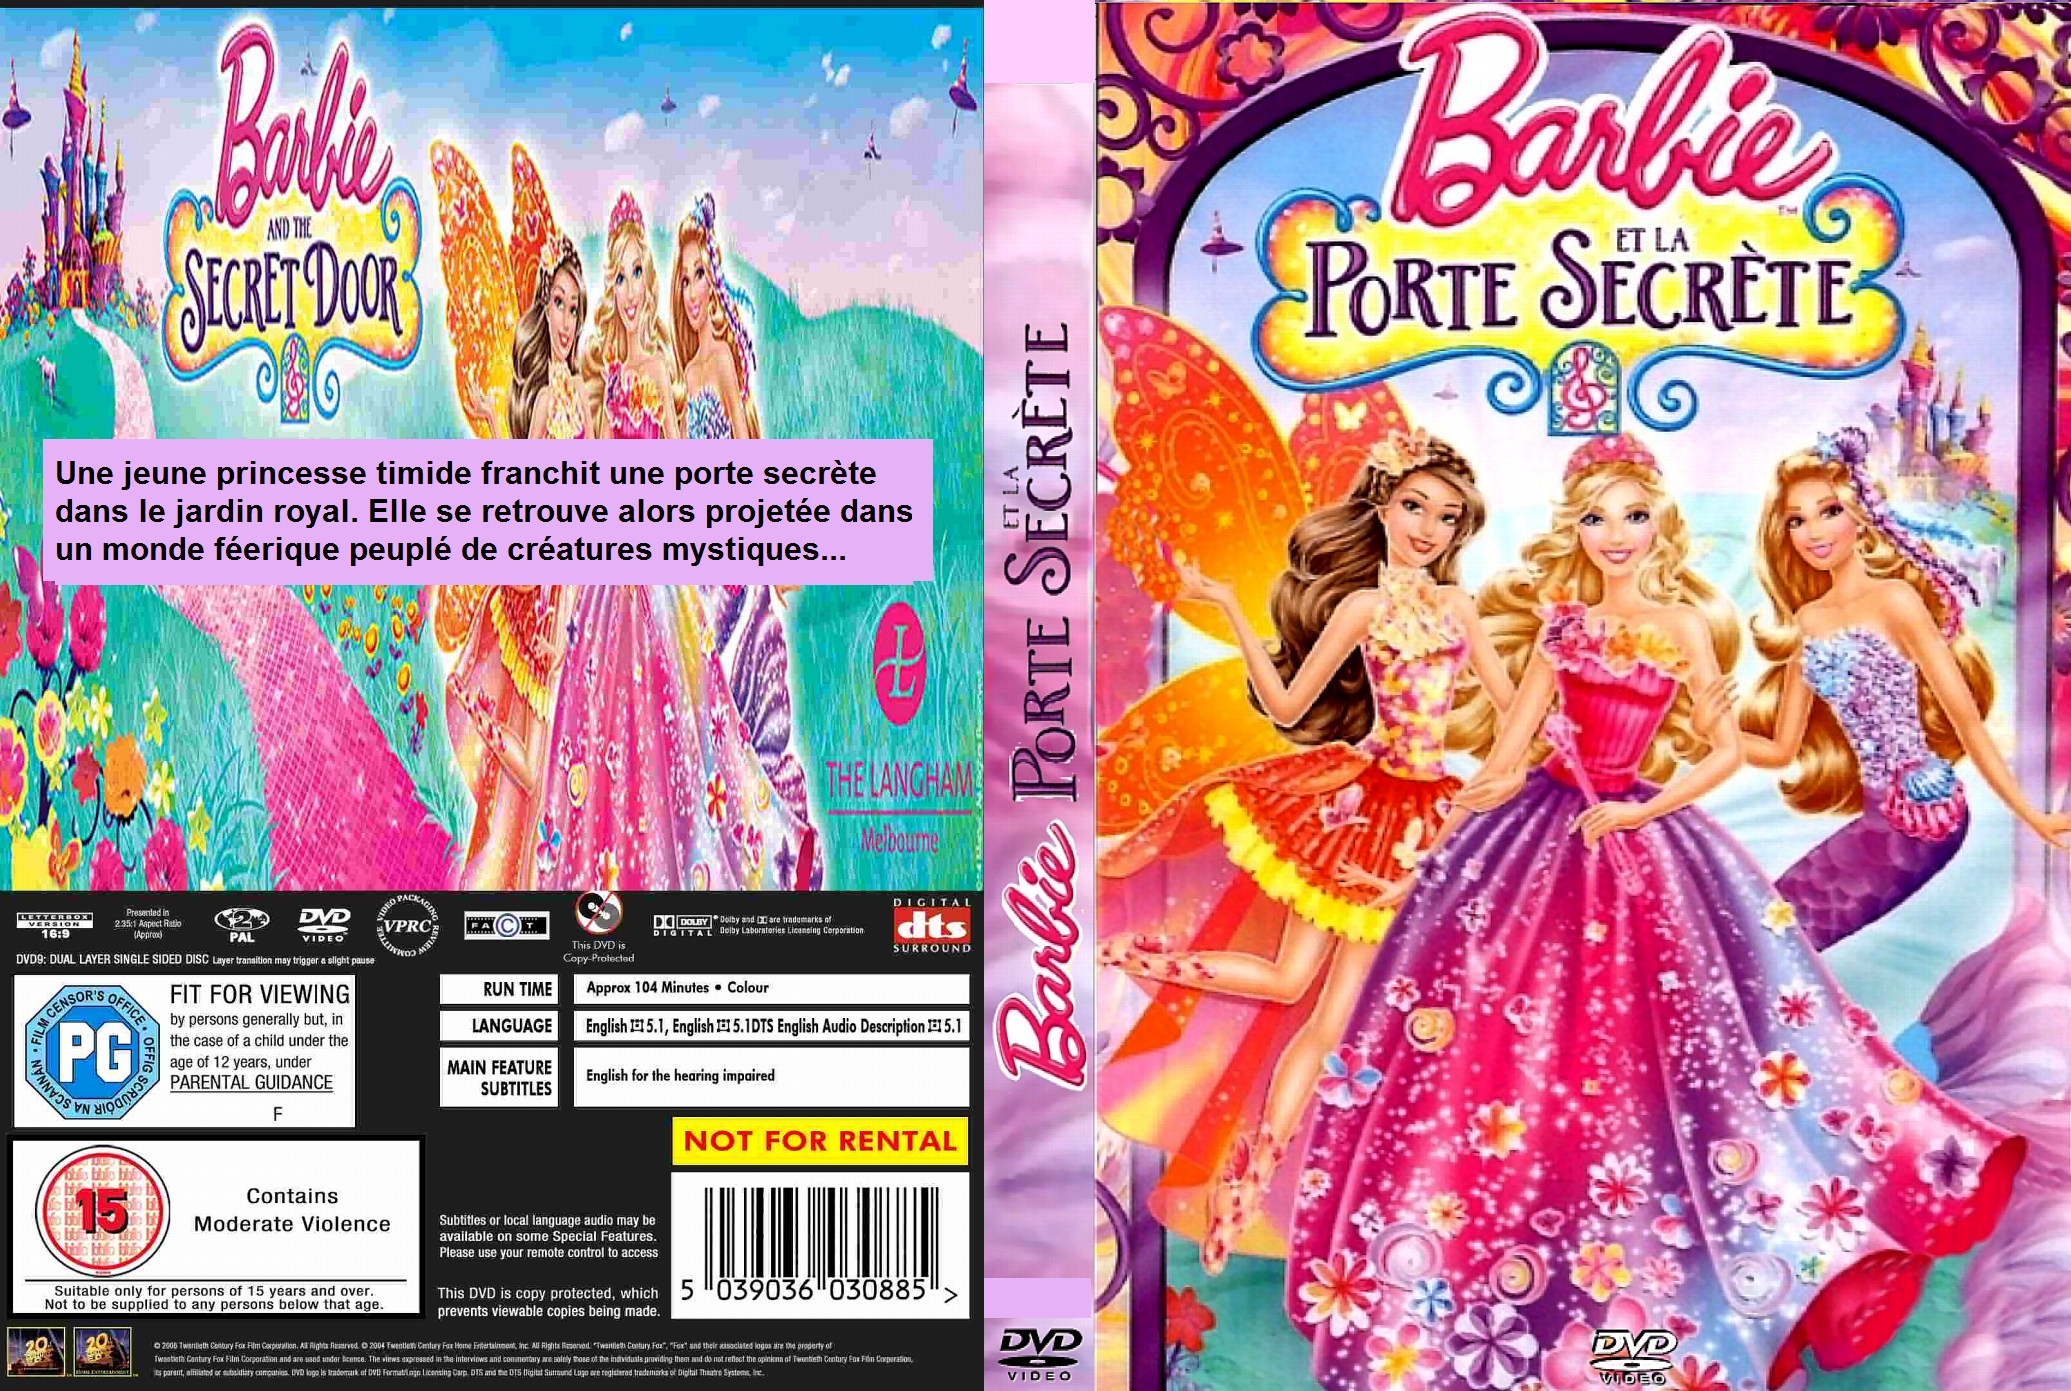 Jaquette DVD Barbie - Et la porte secrete custom